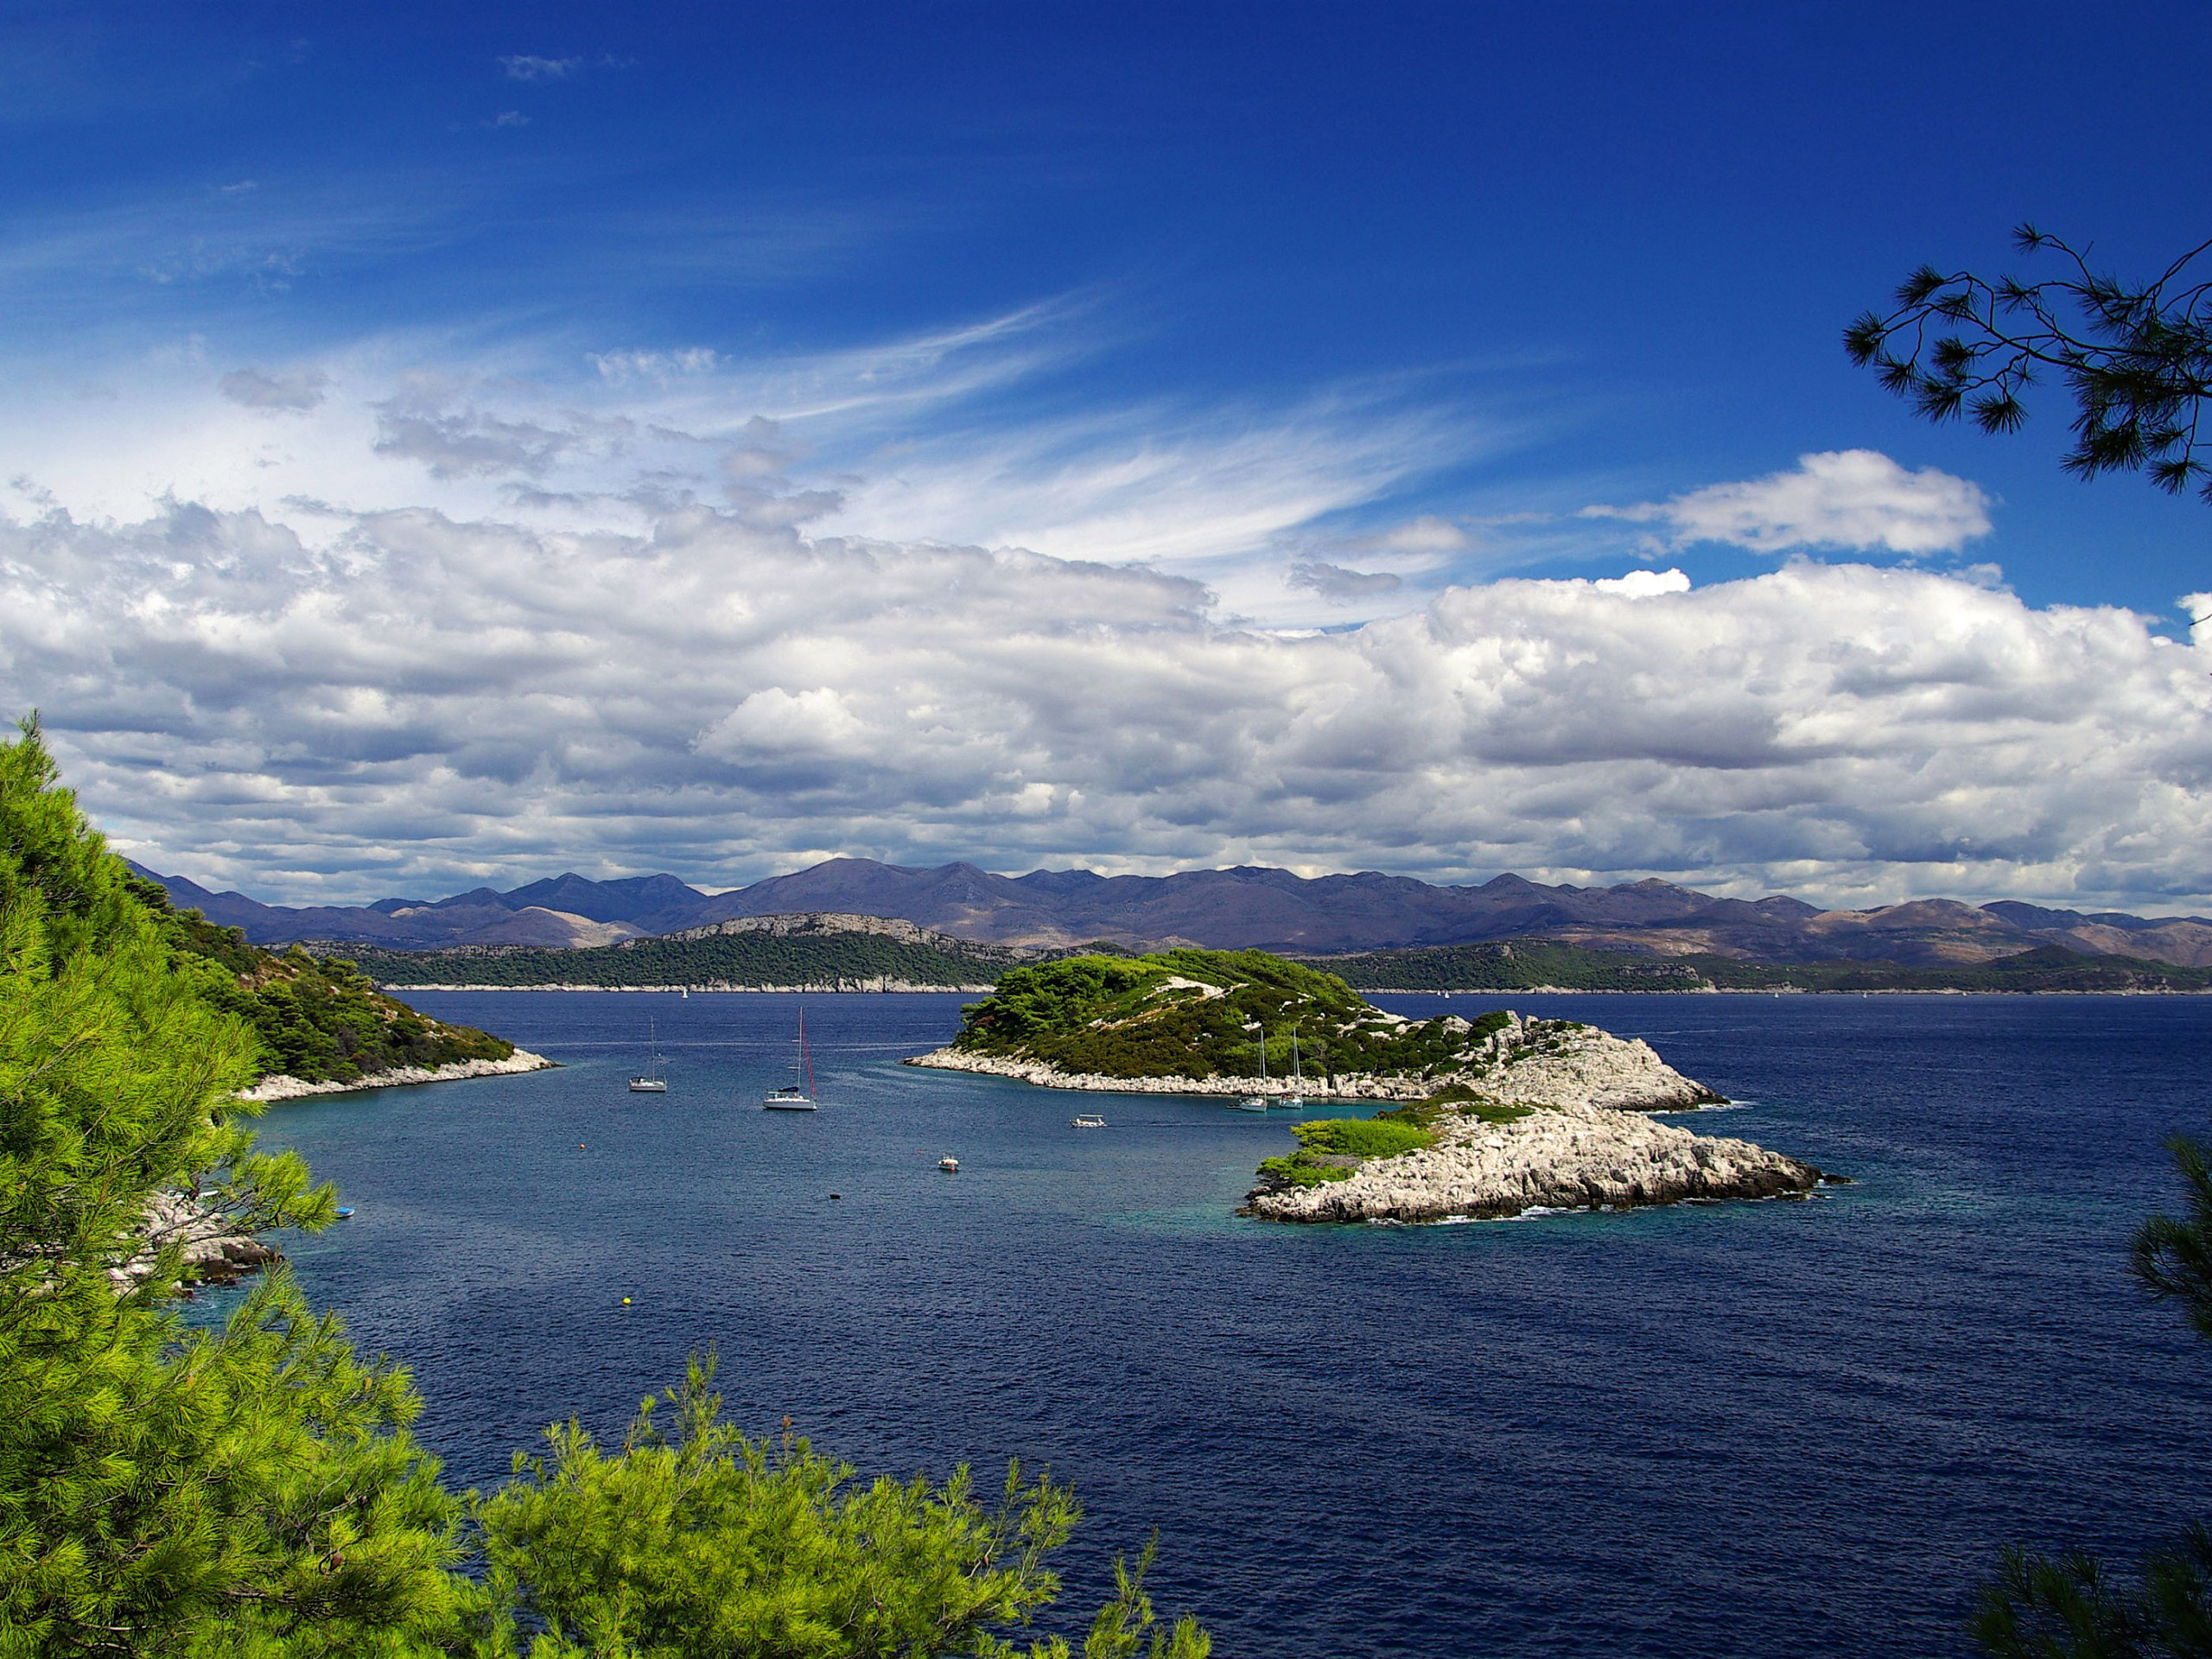 Croatia: Unique beauty of the island of Mljet, The Croatian Adriatic. 2560x1920 HD Wallpaper.